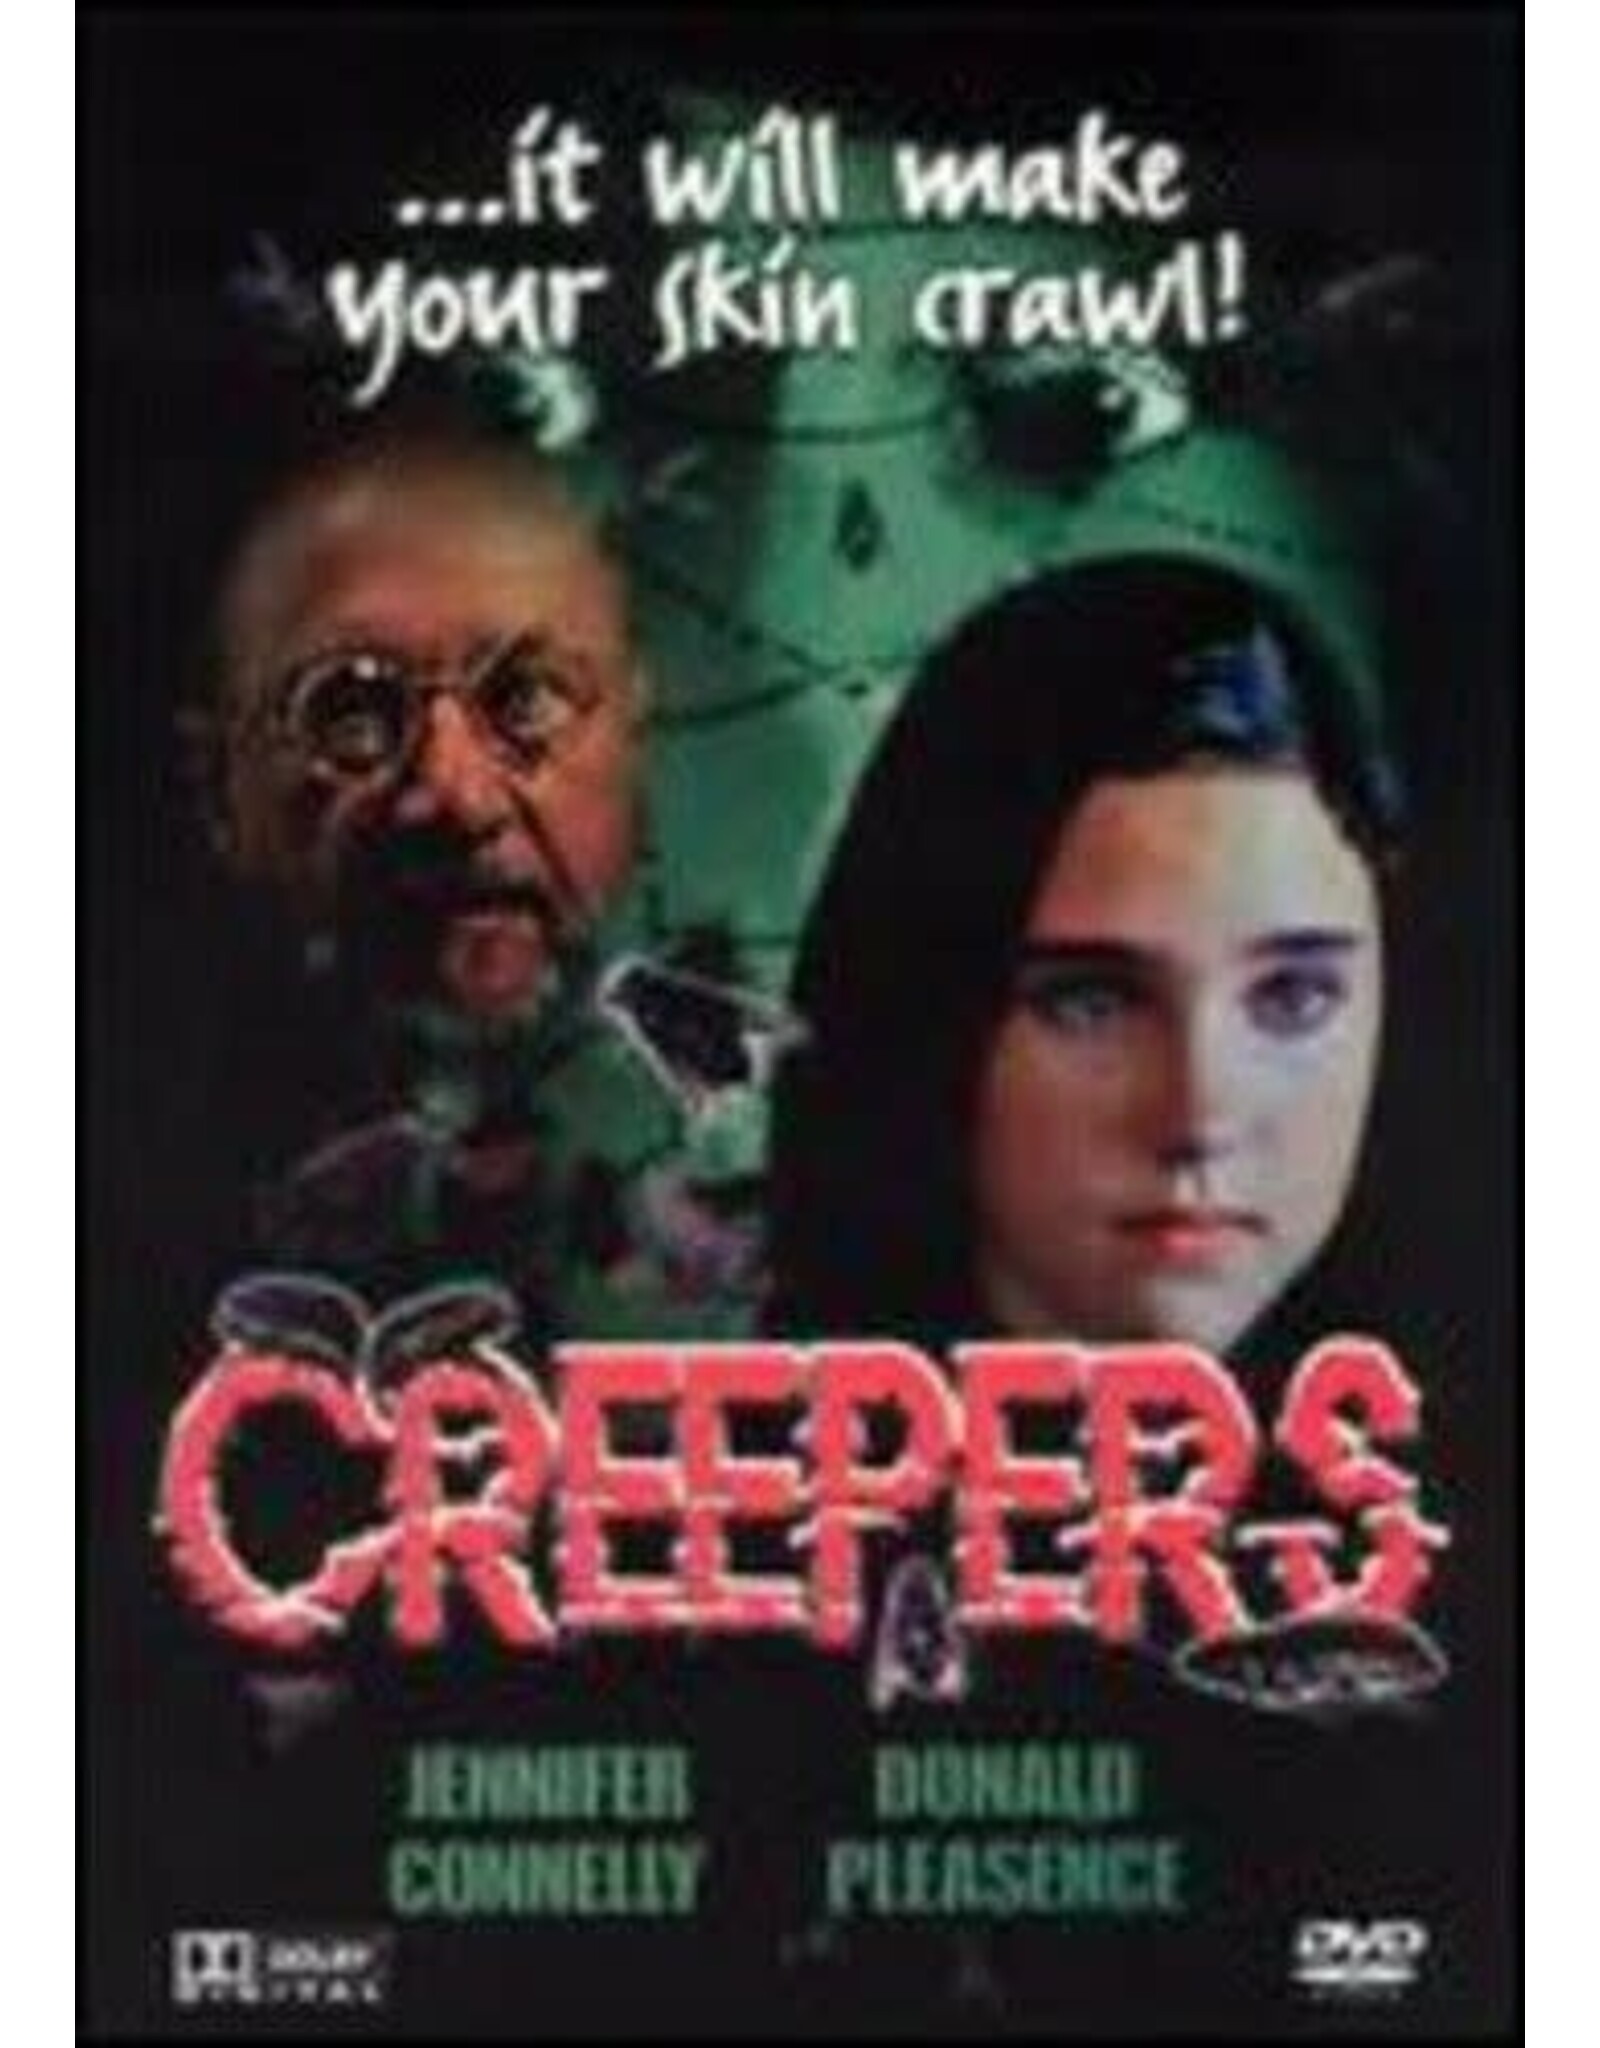 Horror Creepers (AKA Phenomena, Used)